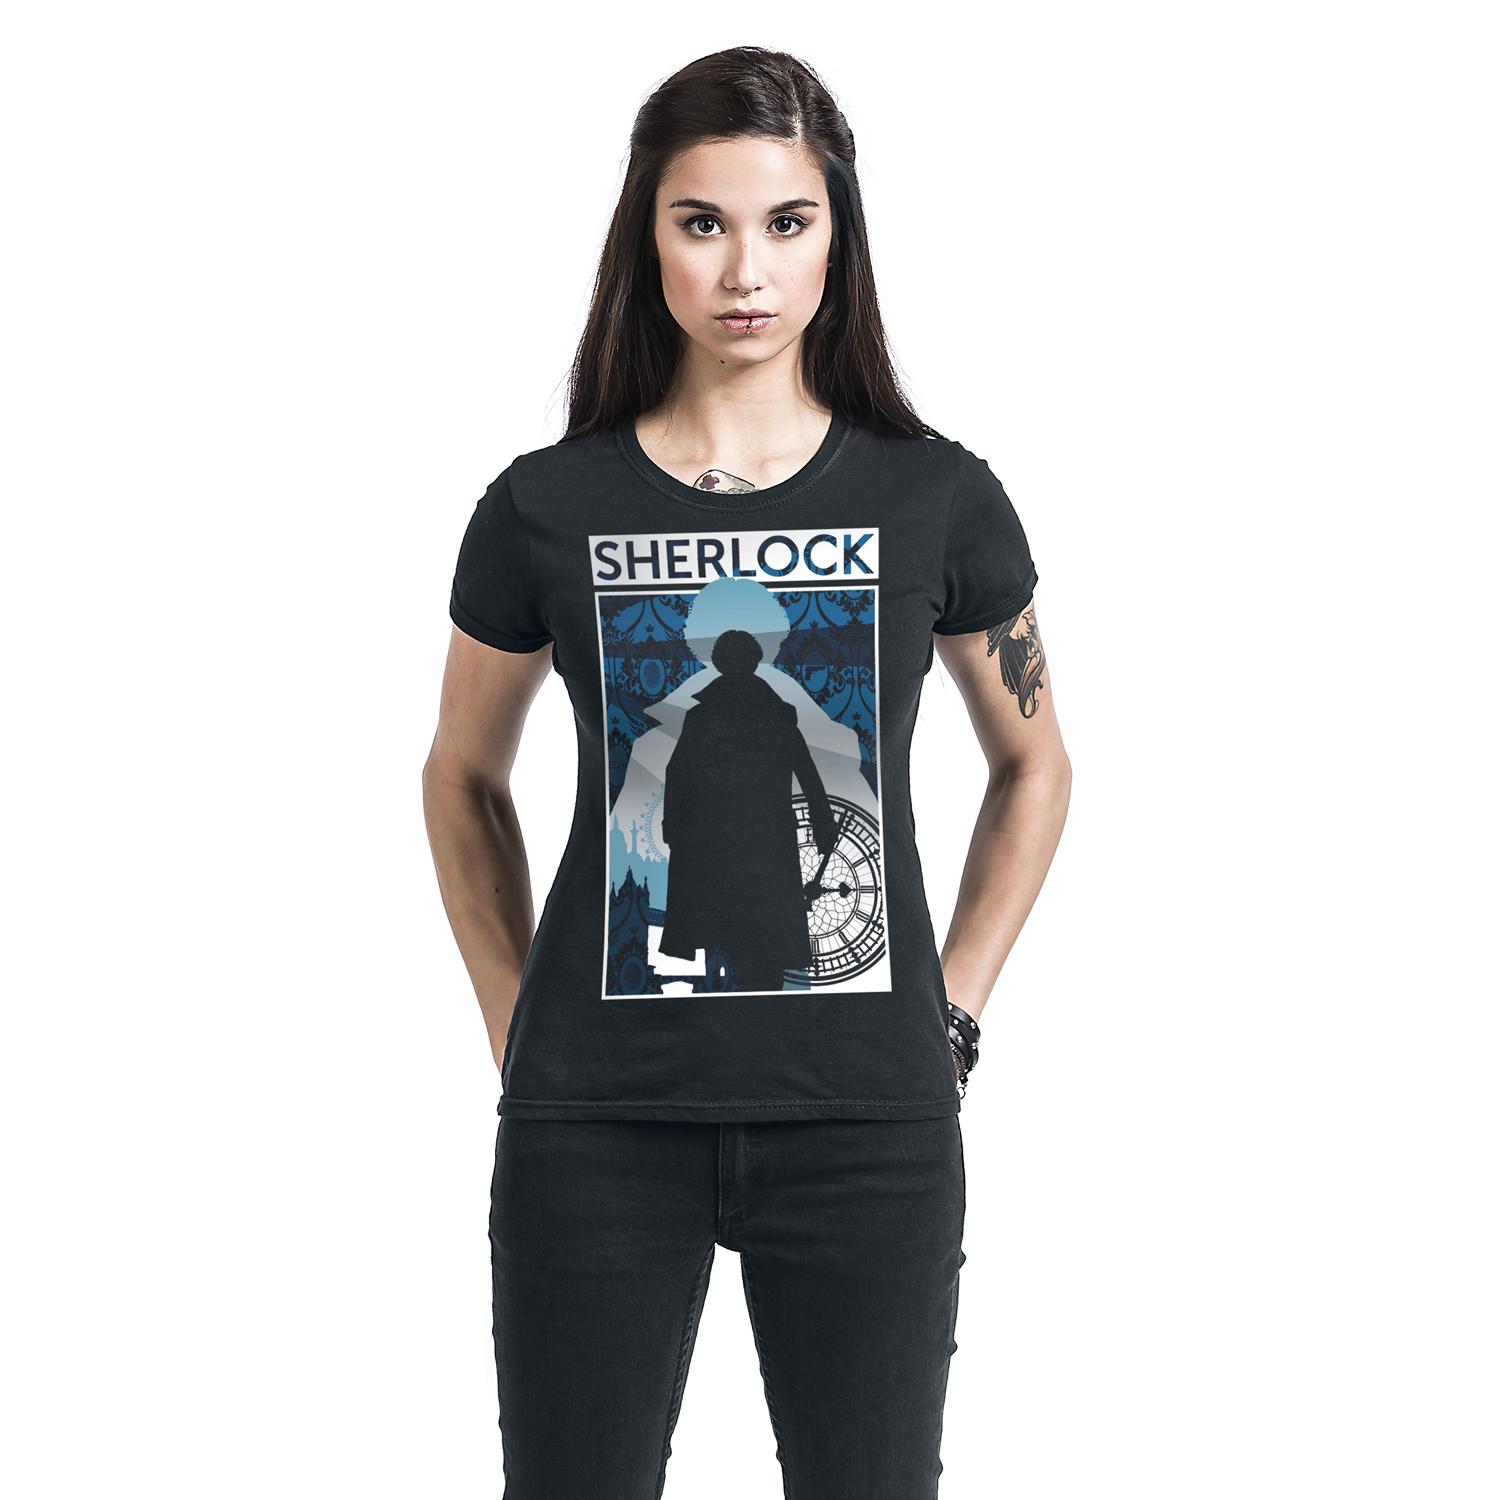 Silhouette City T-shirt Design woman